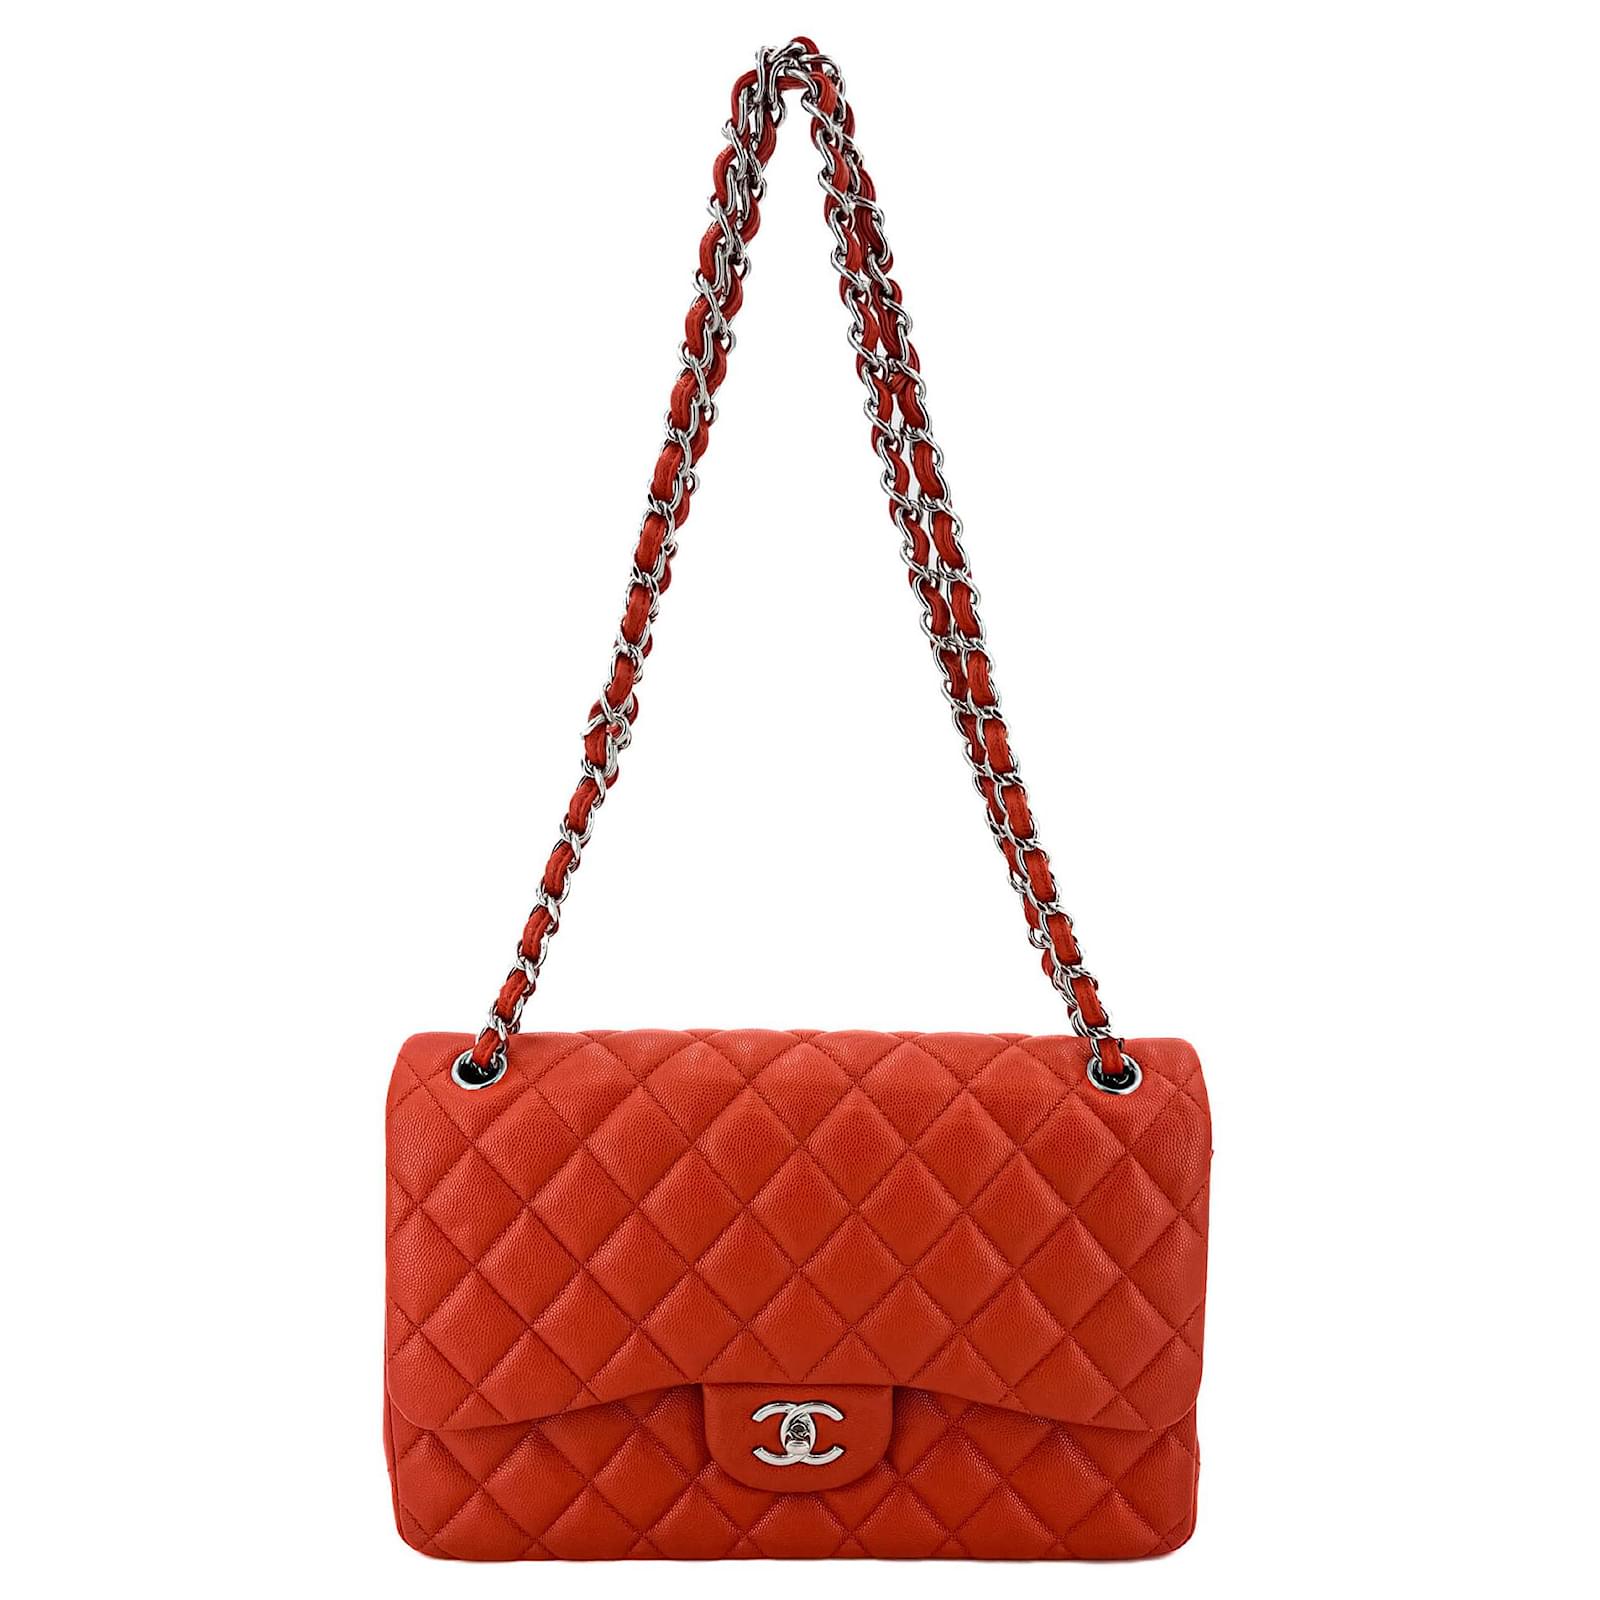 Handbags Chanel Classic Lined Flap Jumbo Caviar Leather Chain Bag Orange